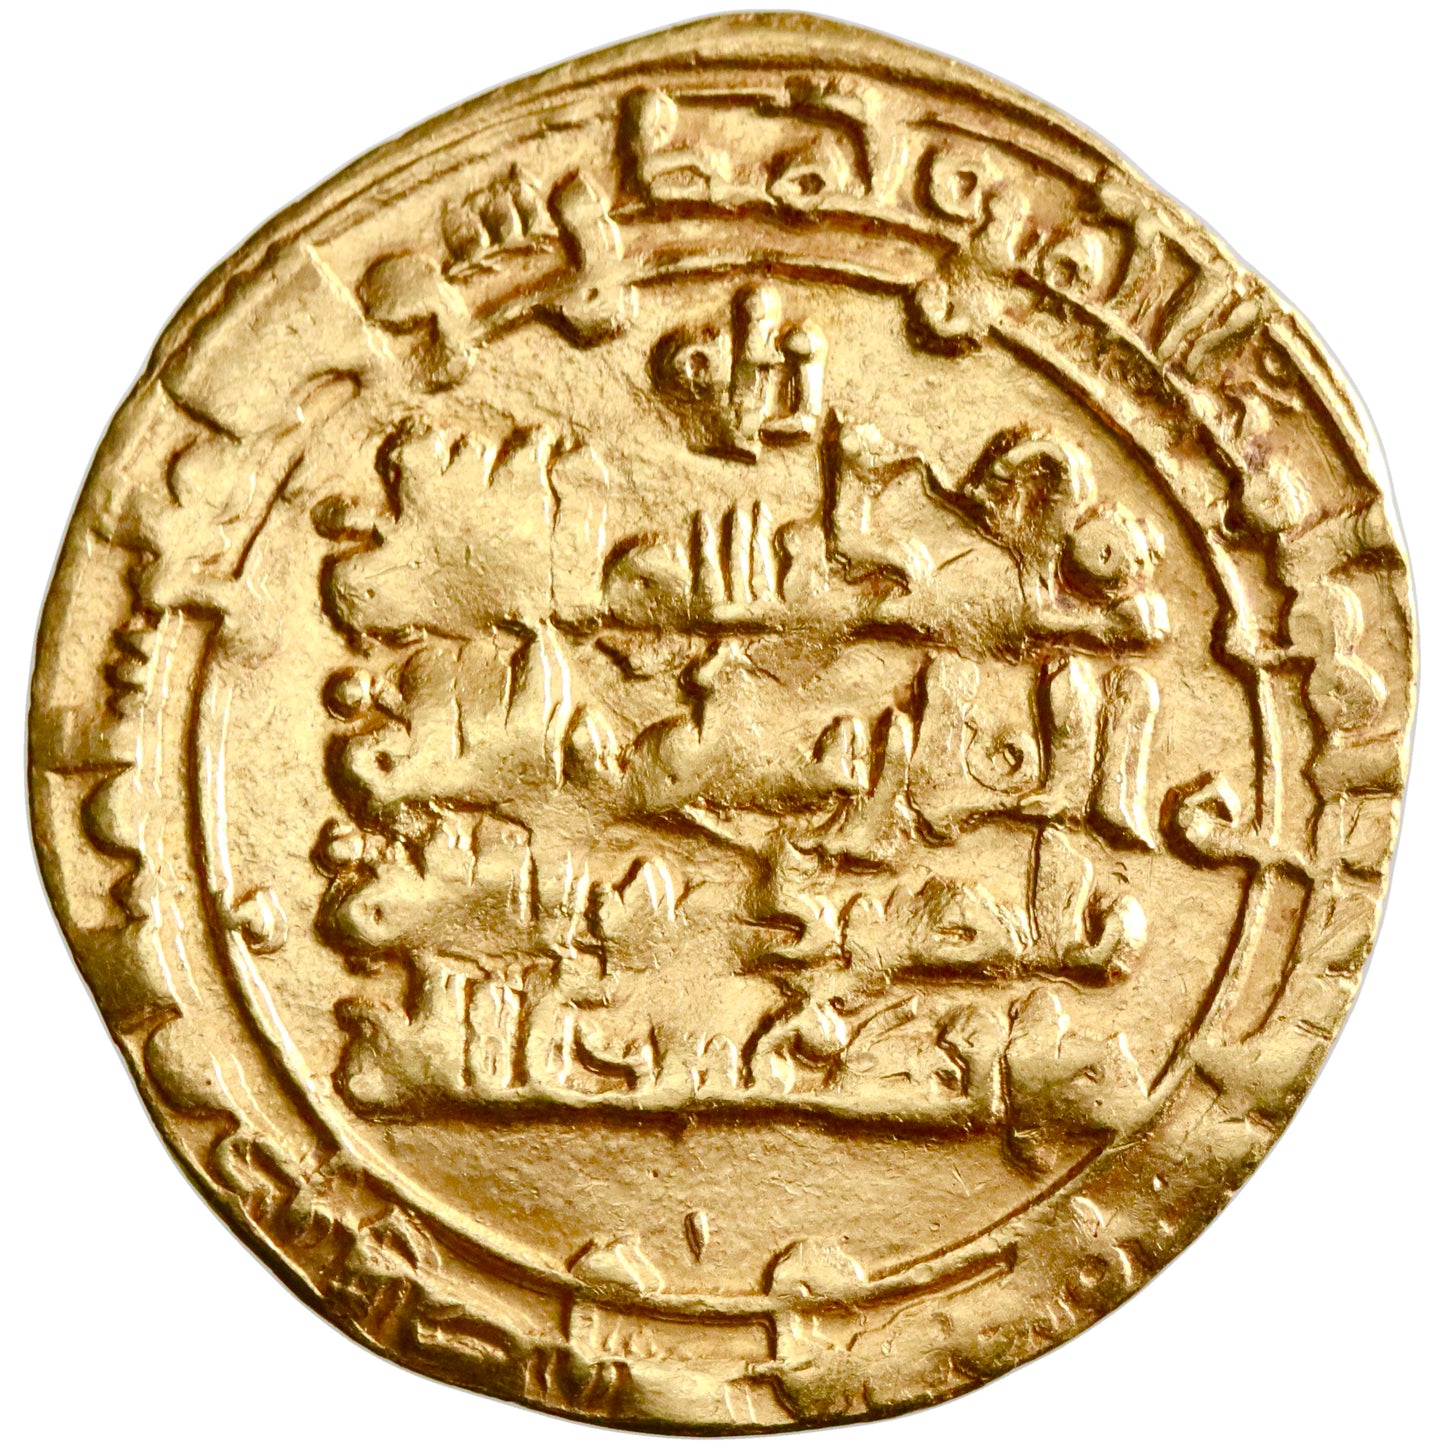 Ghaznavid, Mas'ud I ibn Mahmud, gold dinar, Naysabur (Nishapur) mint, AH 426, citing al-Qa'im